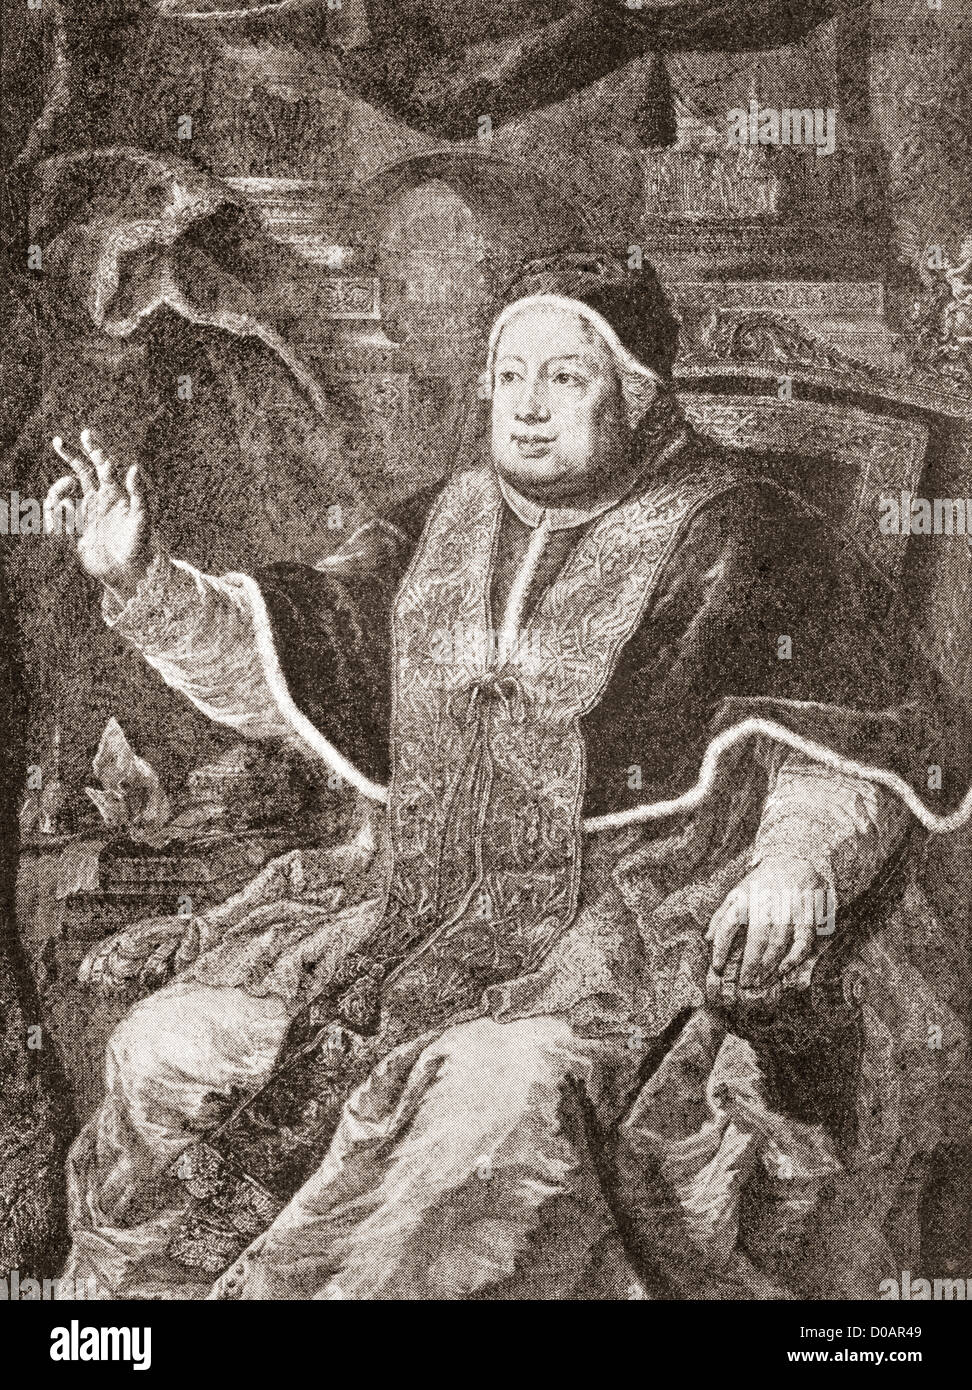 Papst Clement XIII, 1693 – 1769, Carlo della Torre di Rezzonico geboren. Stockfoto